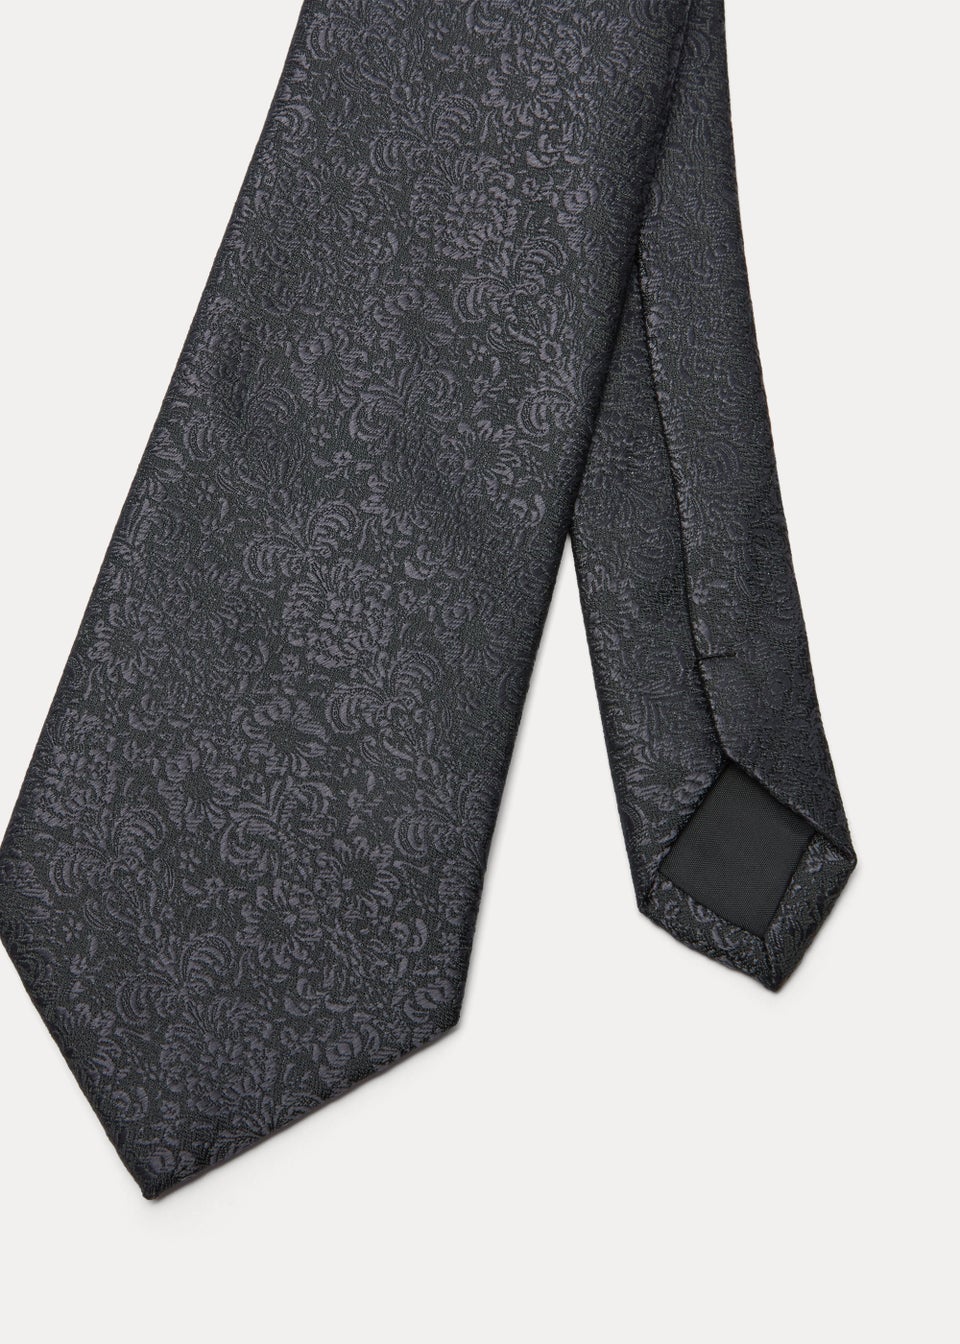 Taylor & Wright Black Floral Print Tie